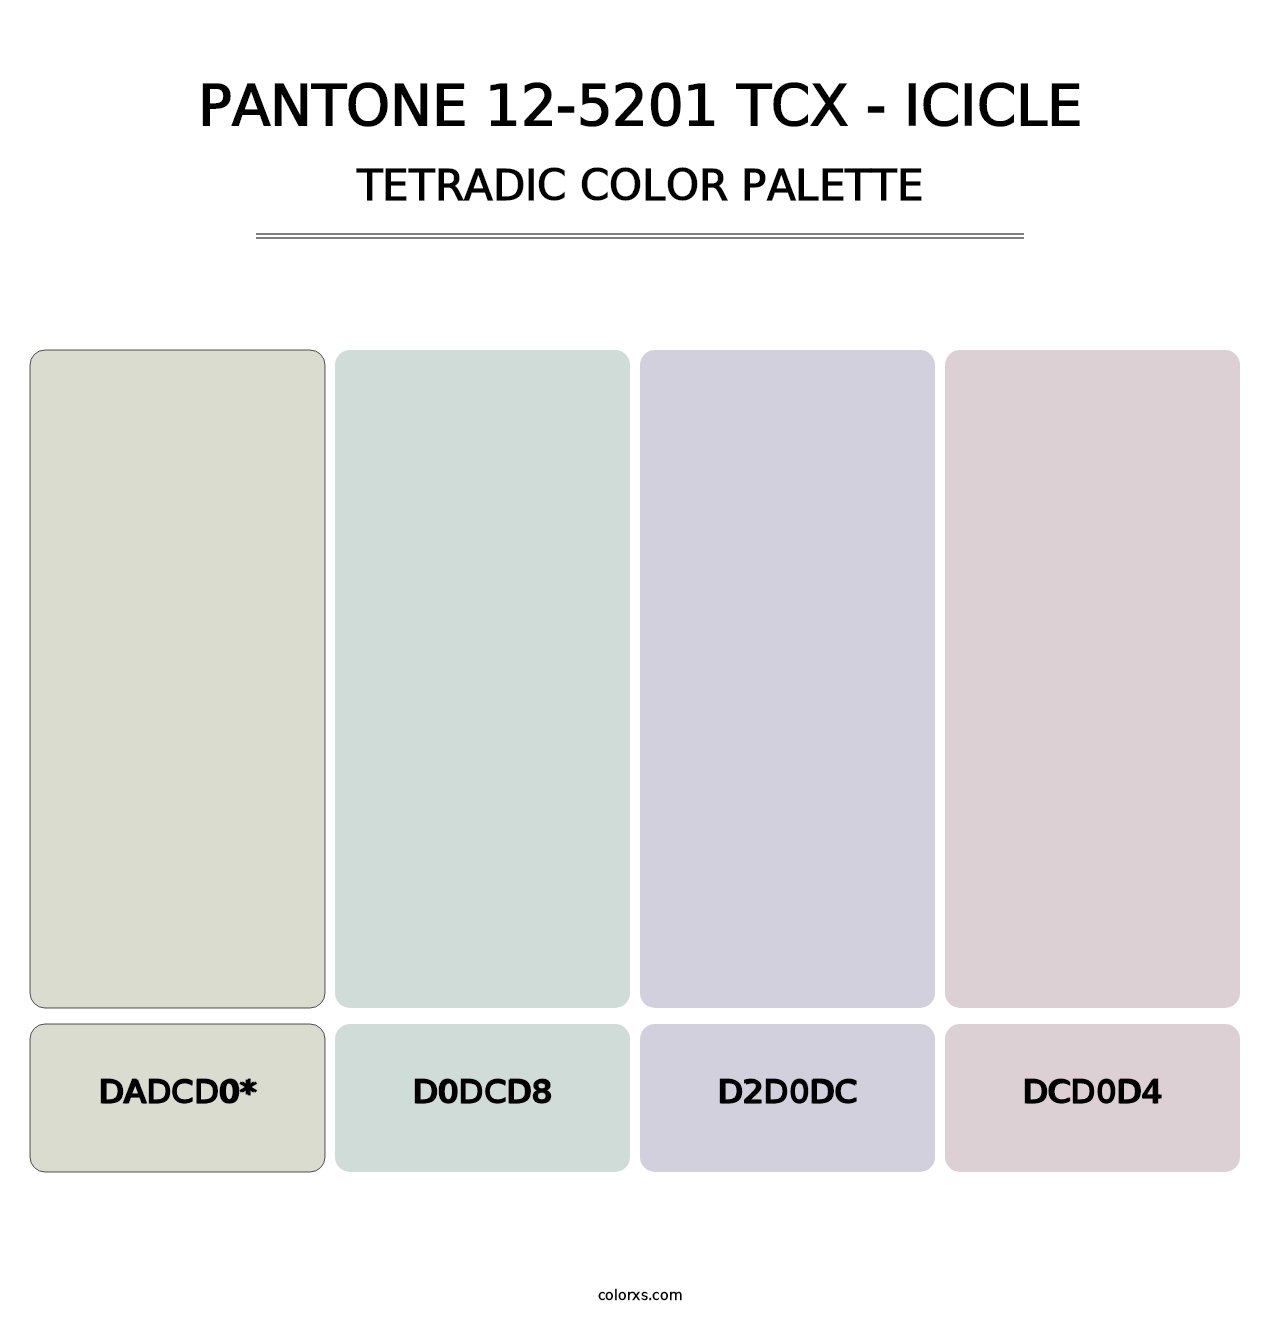 PANTONE 12-5201 TCX - Icicle - Tetradic Color Palette